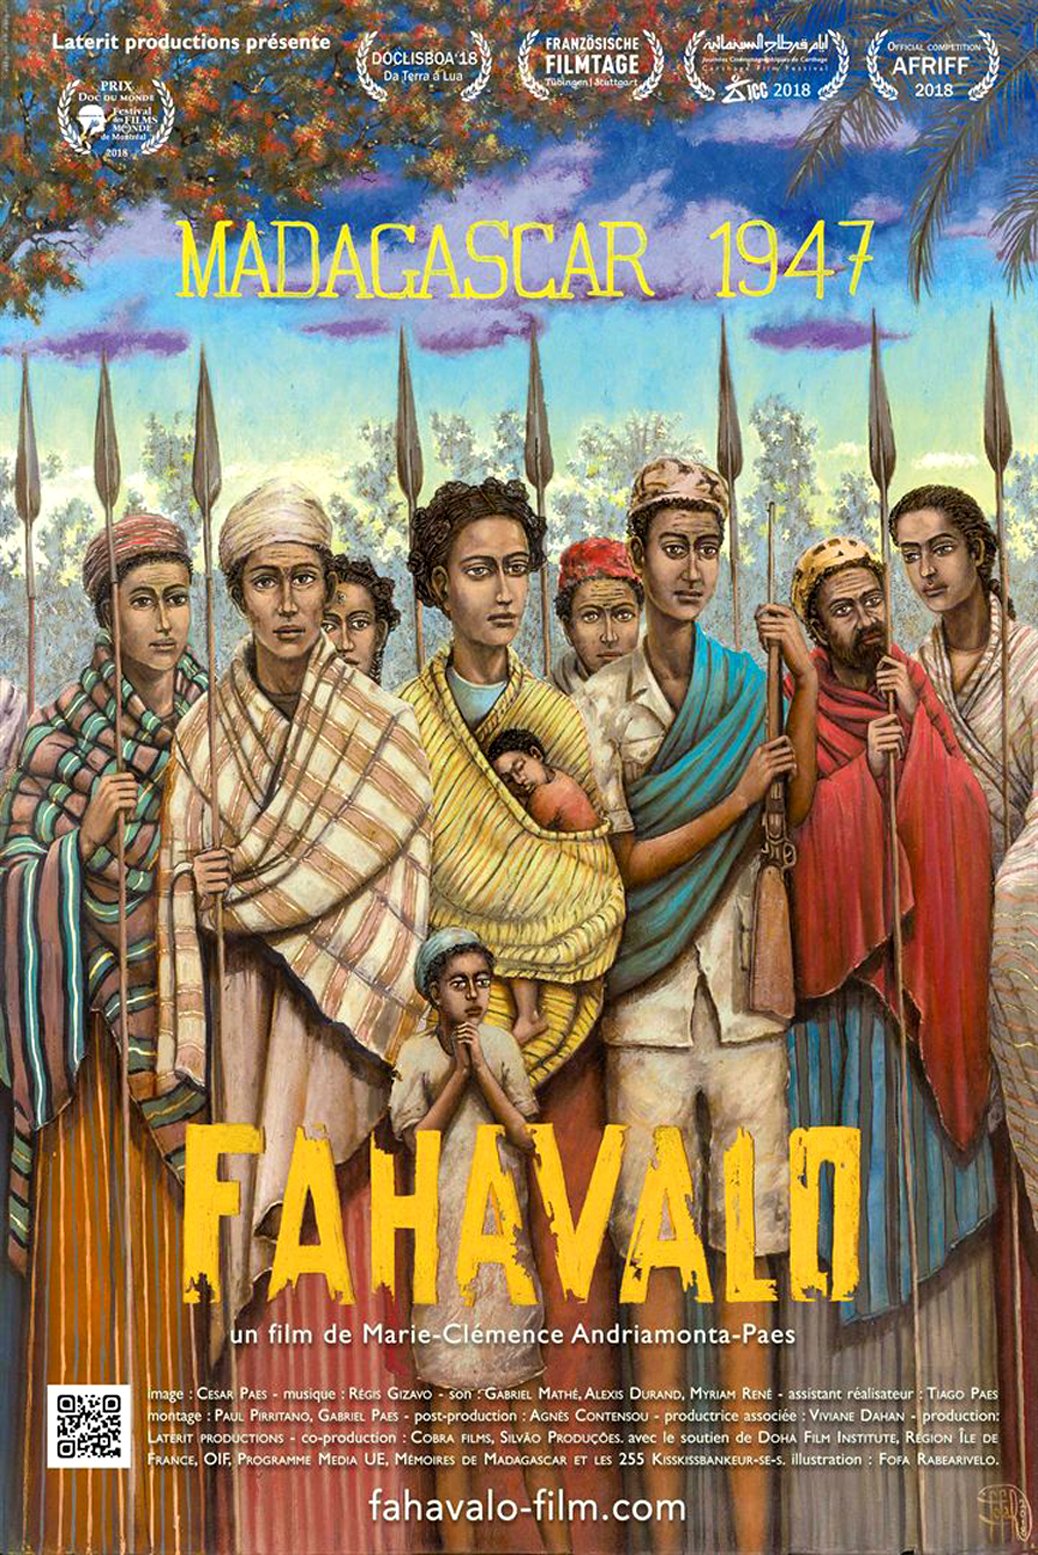 Fahavalo, Madagascar 1947, de Marie-Clémence Andriamonta-Paes, sorti le 30 janvier